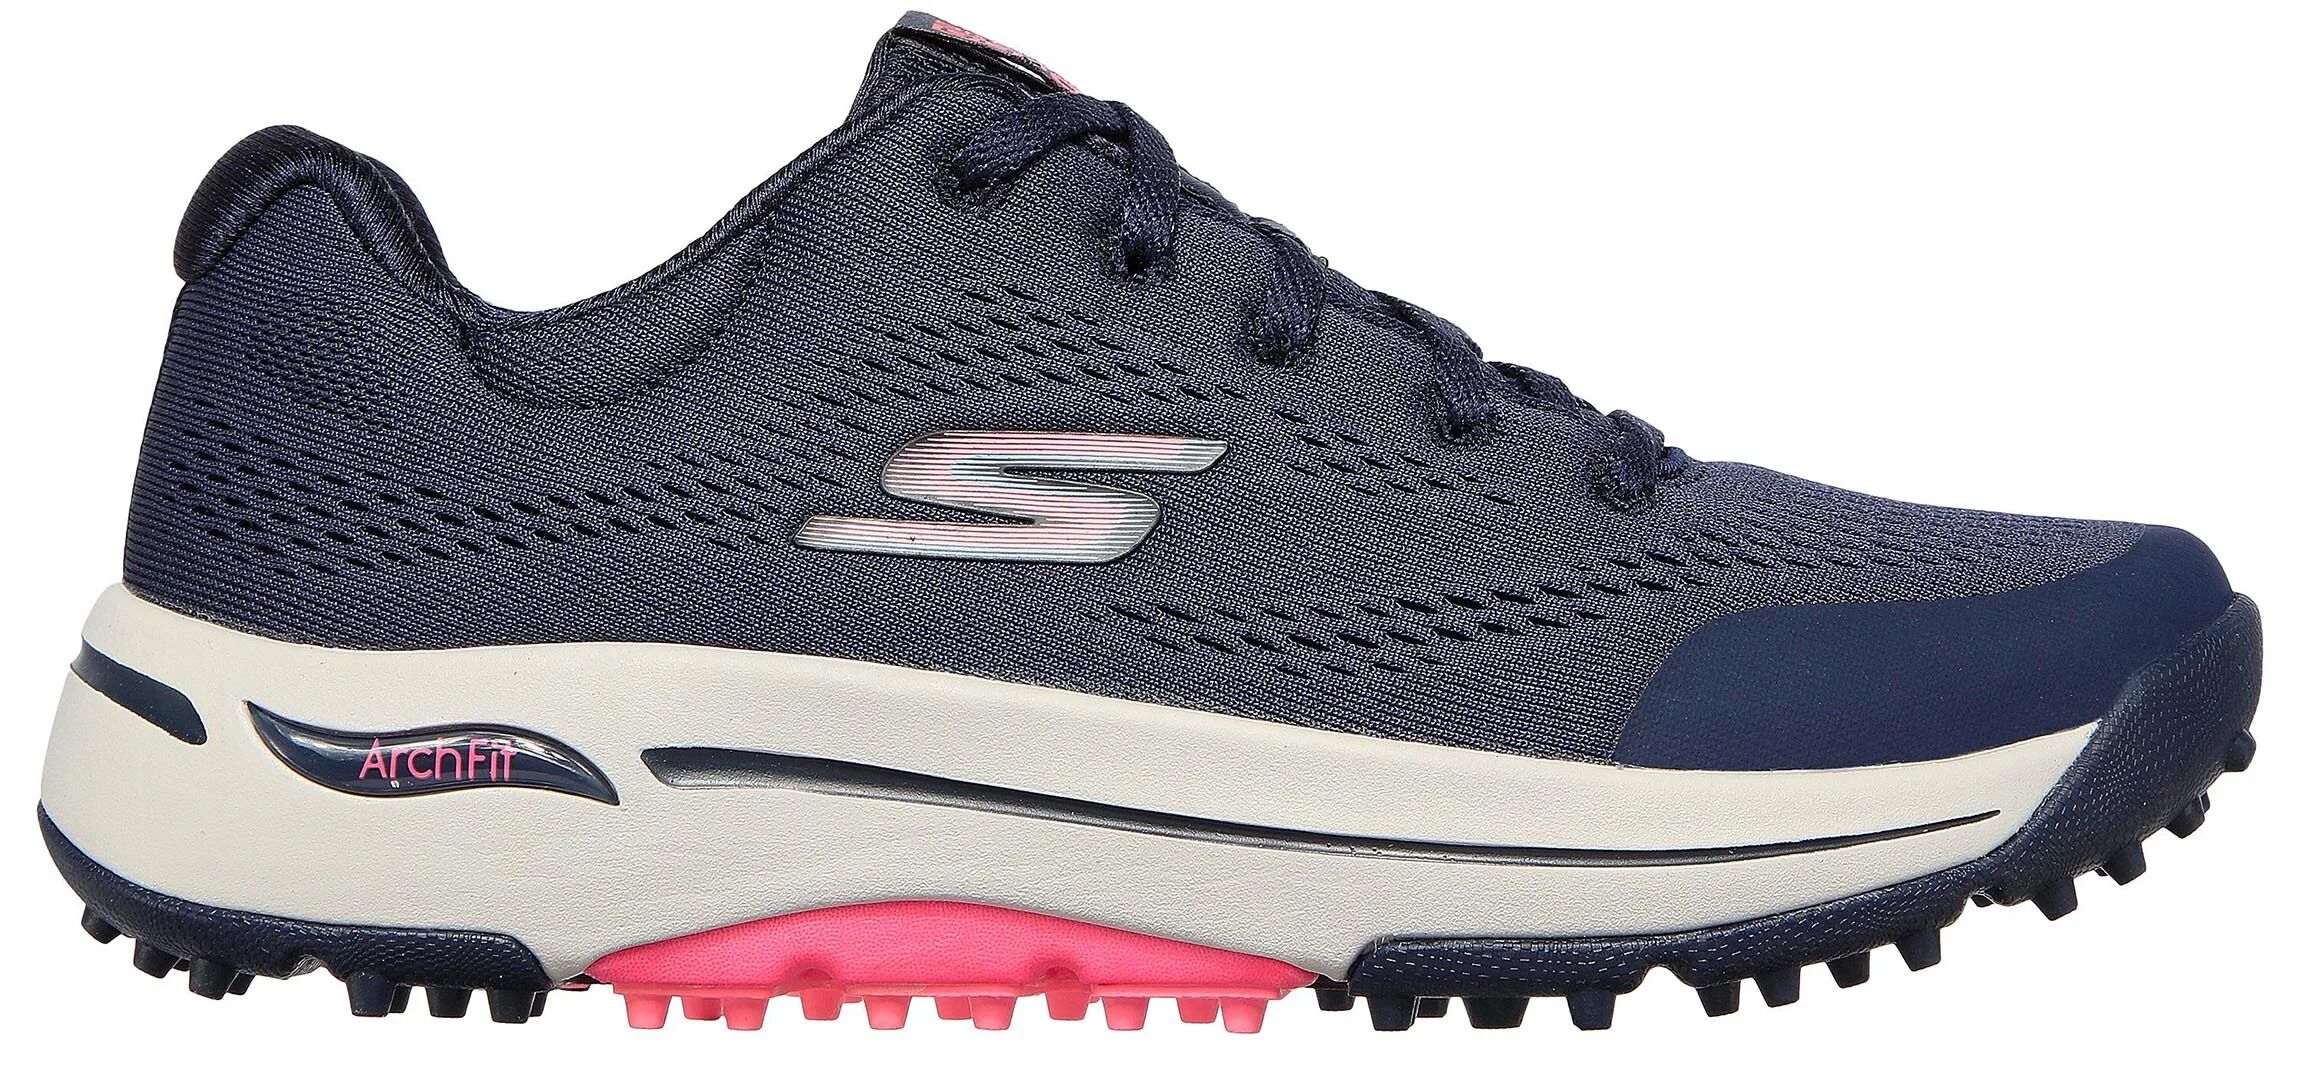 Skechers Womens GO GOLF Arch Fit Balance Golf Shoes - Navy/Pink - 6.5 - MEDIUM